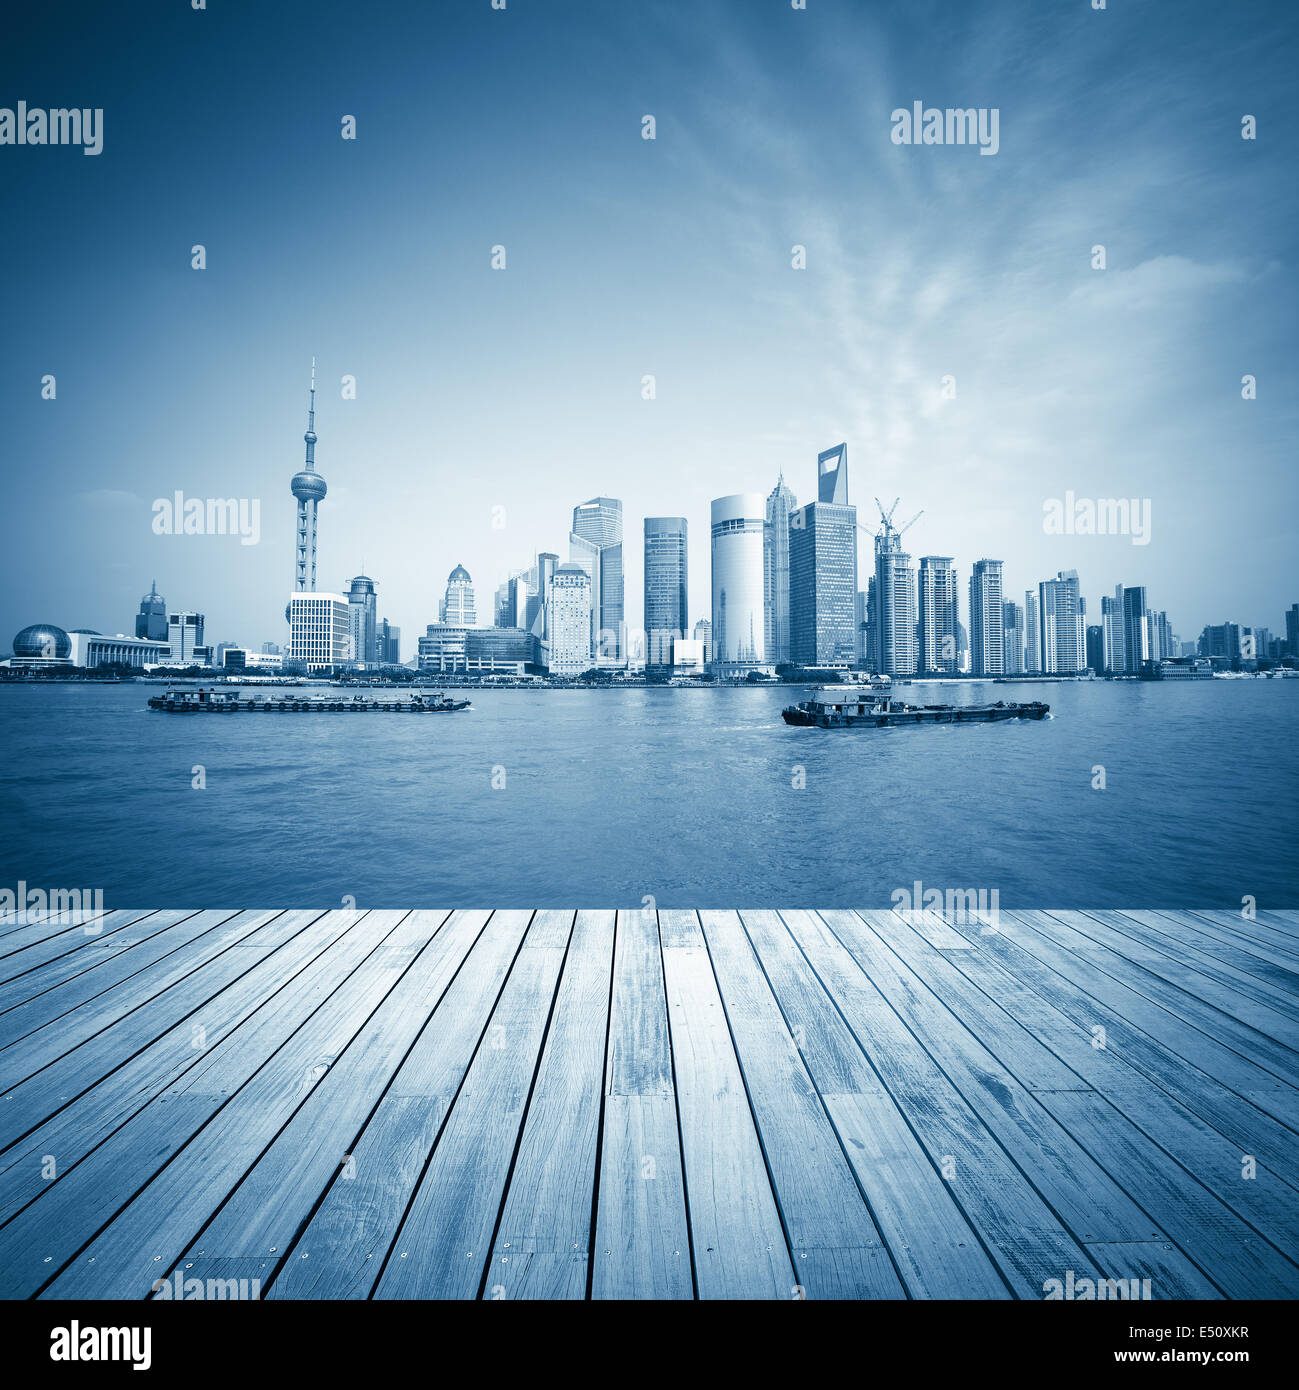 shanghai skyline and wooden floor Stock Photo